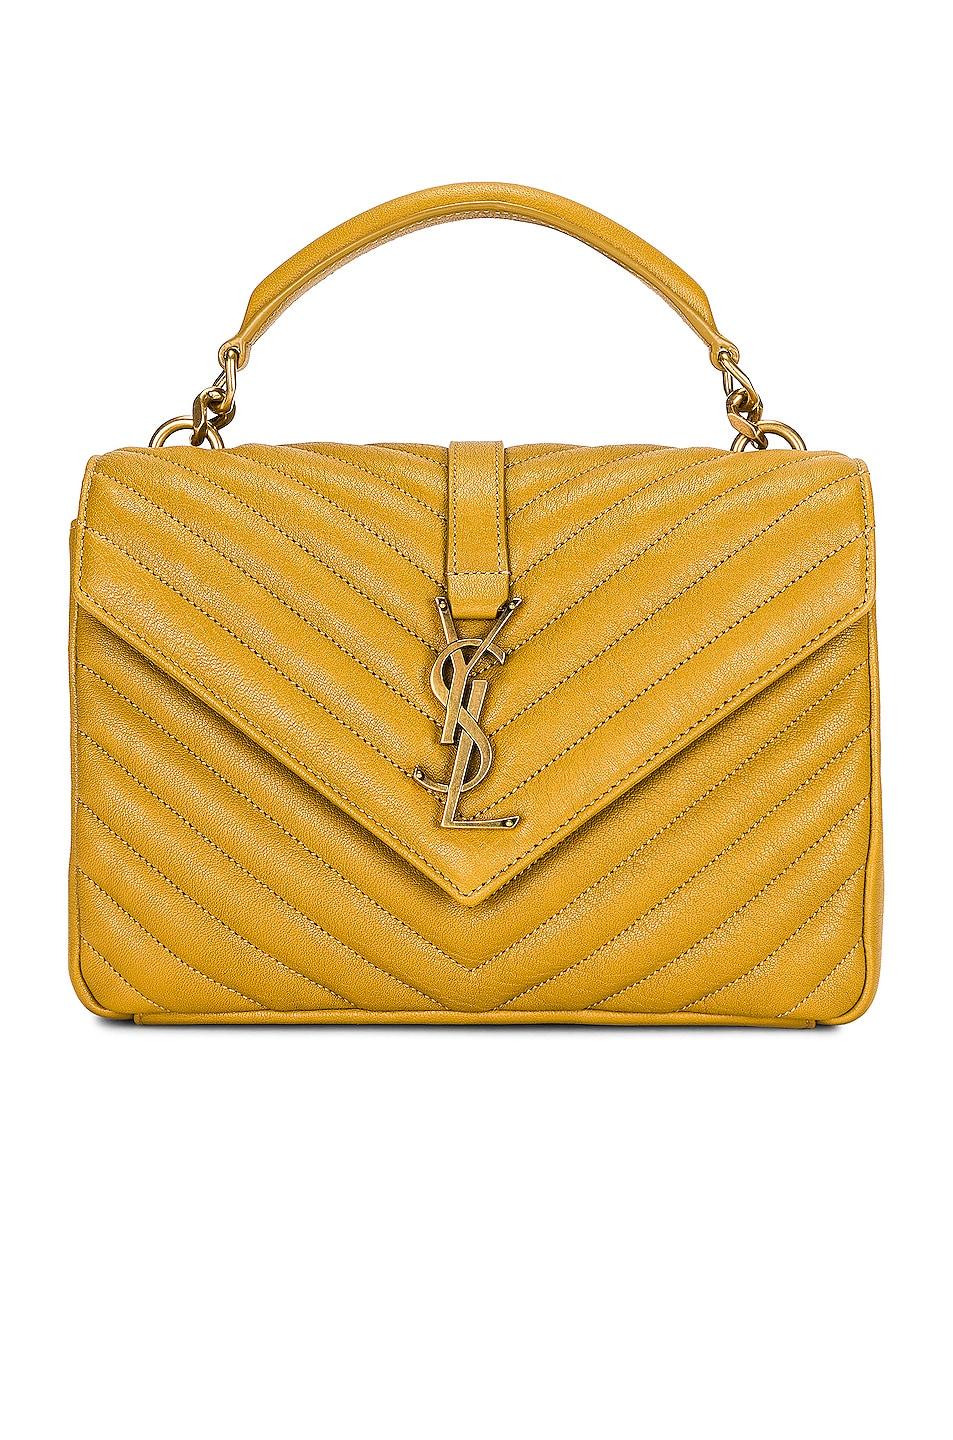 Saint Laurent Leather Medium College Bag in Golden Olive (Yellow) | Lyst